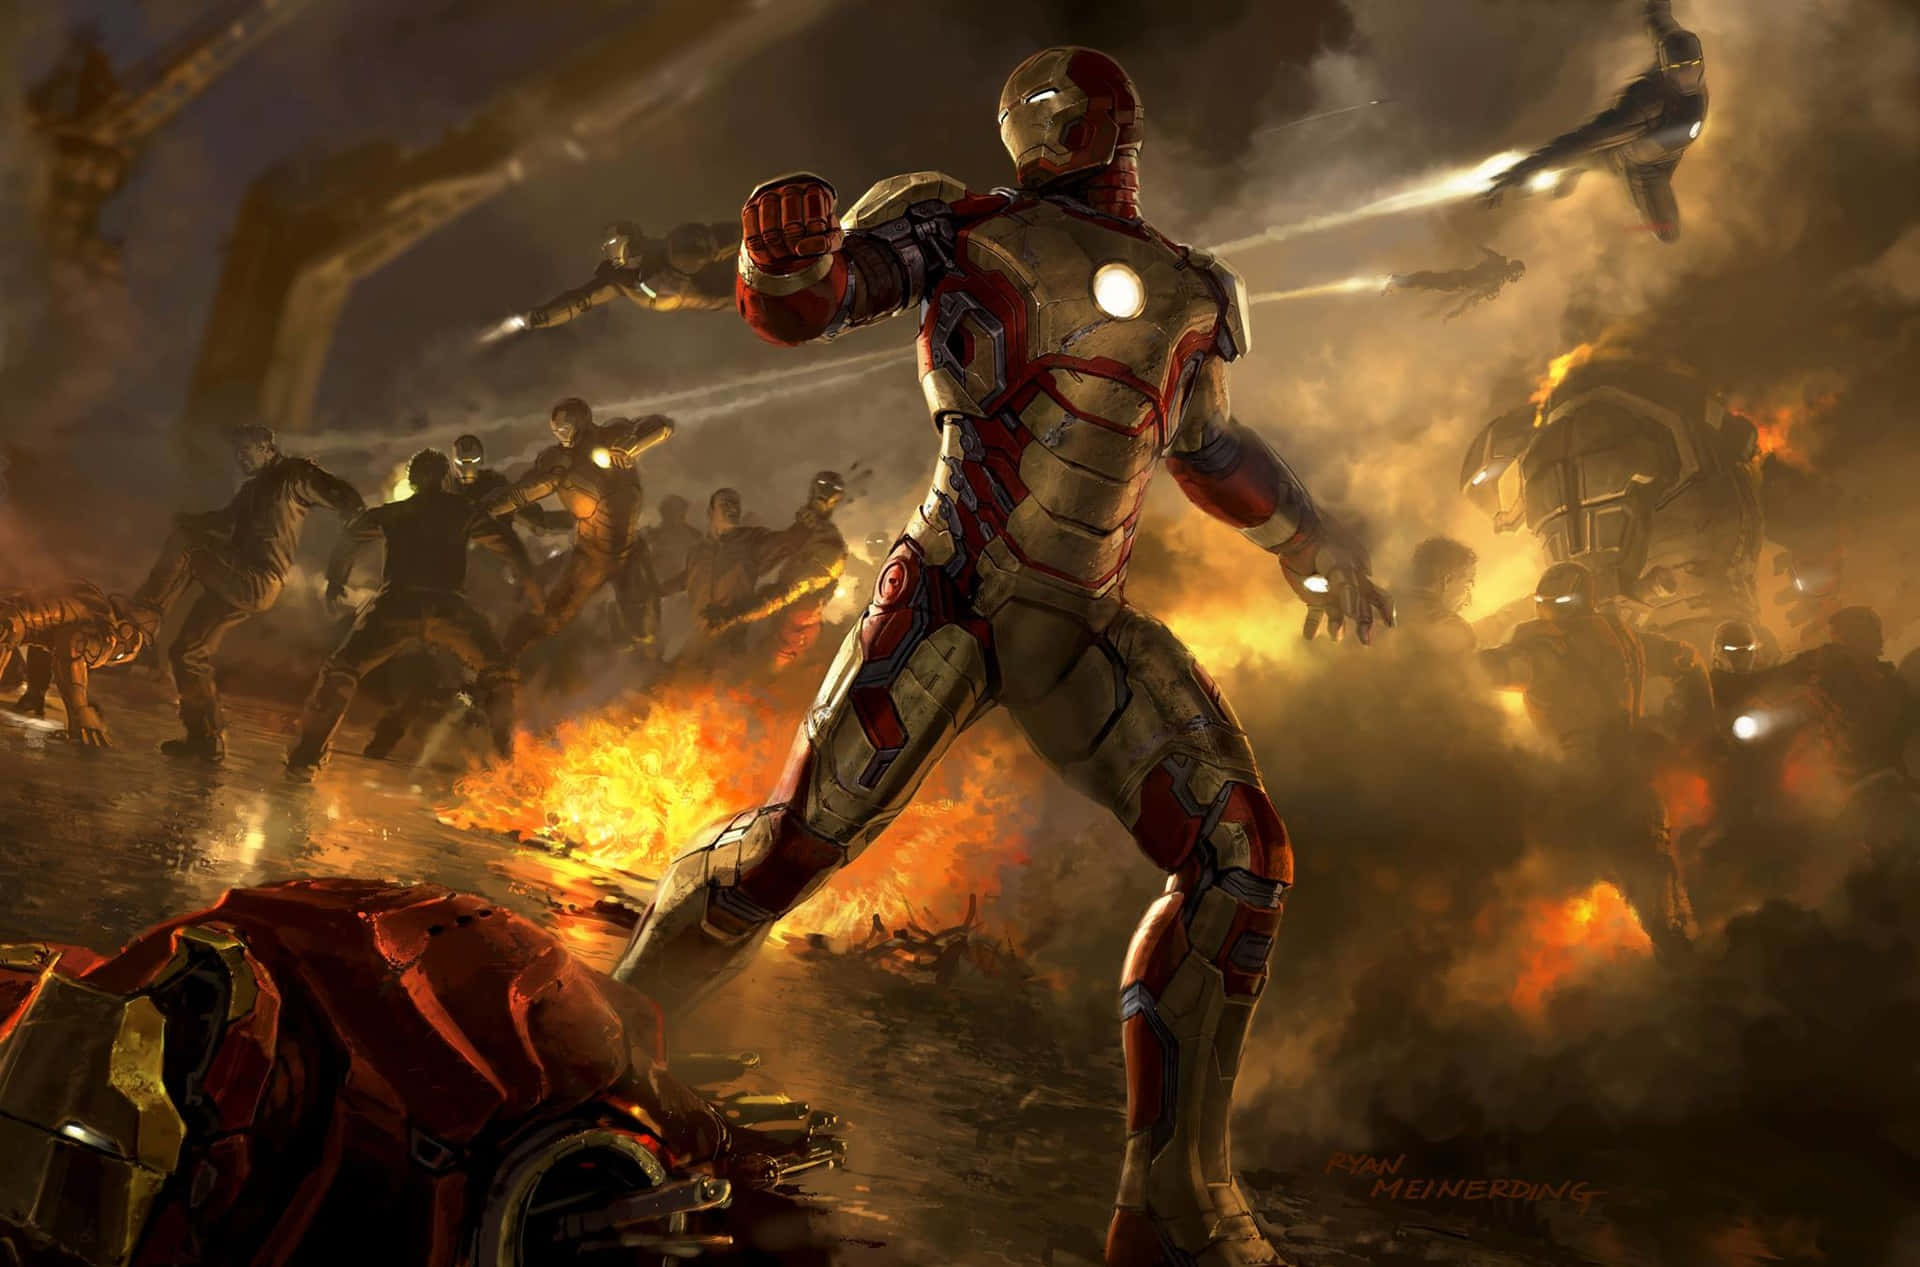 Best Iron Man - The Avenger